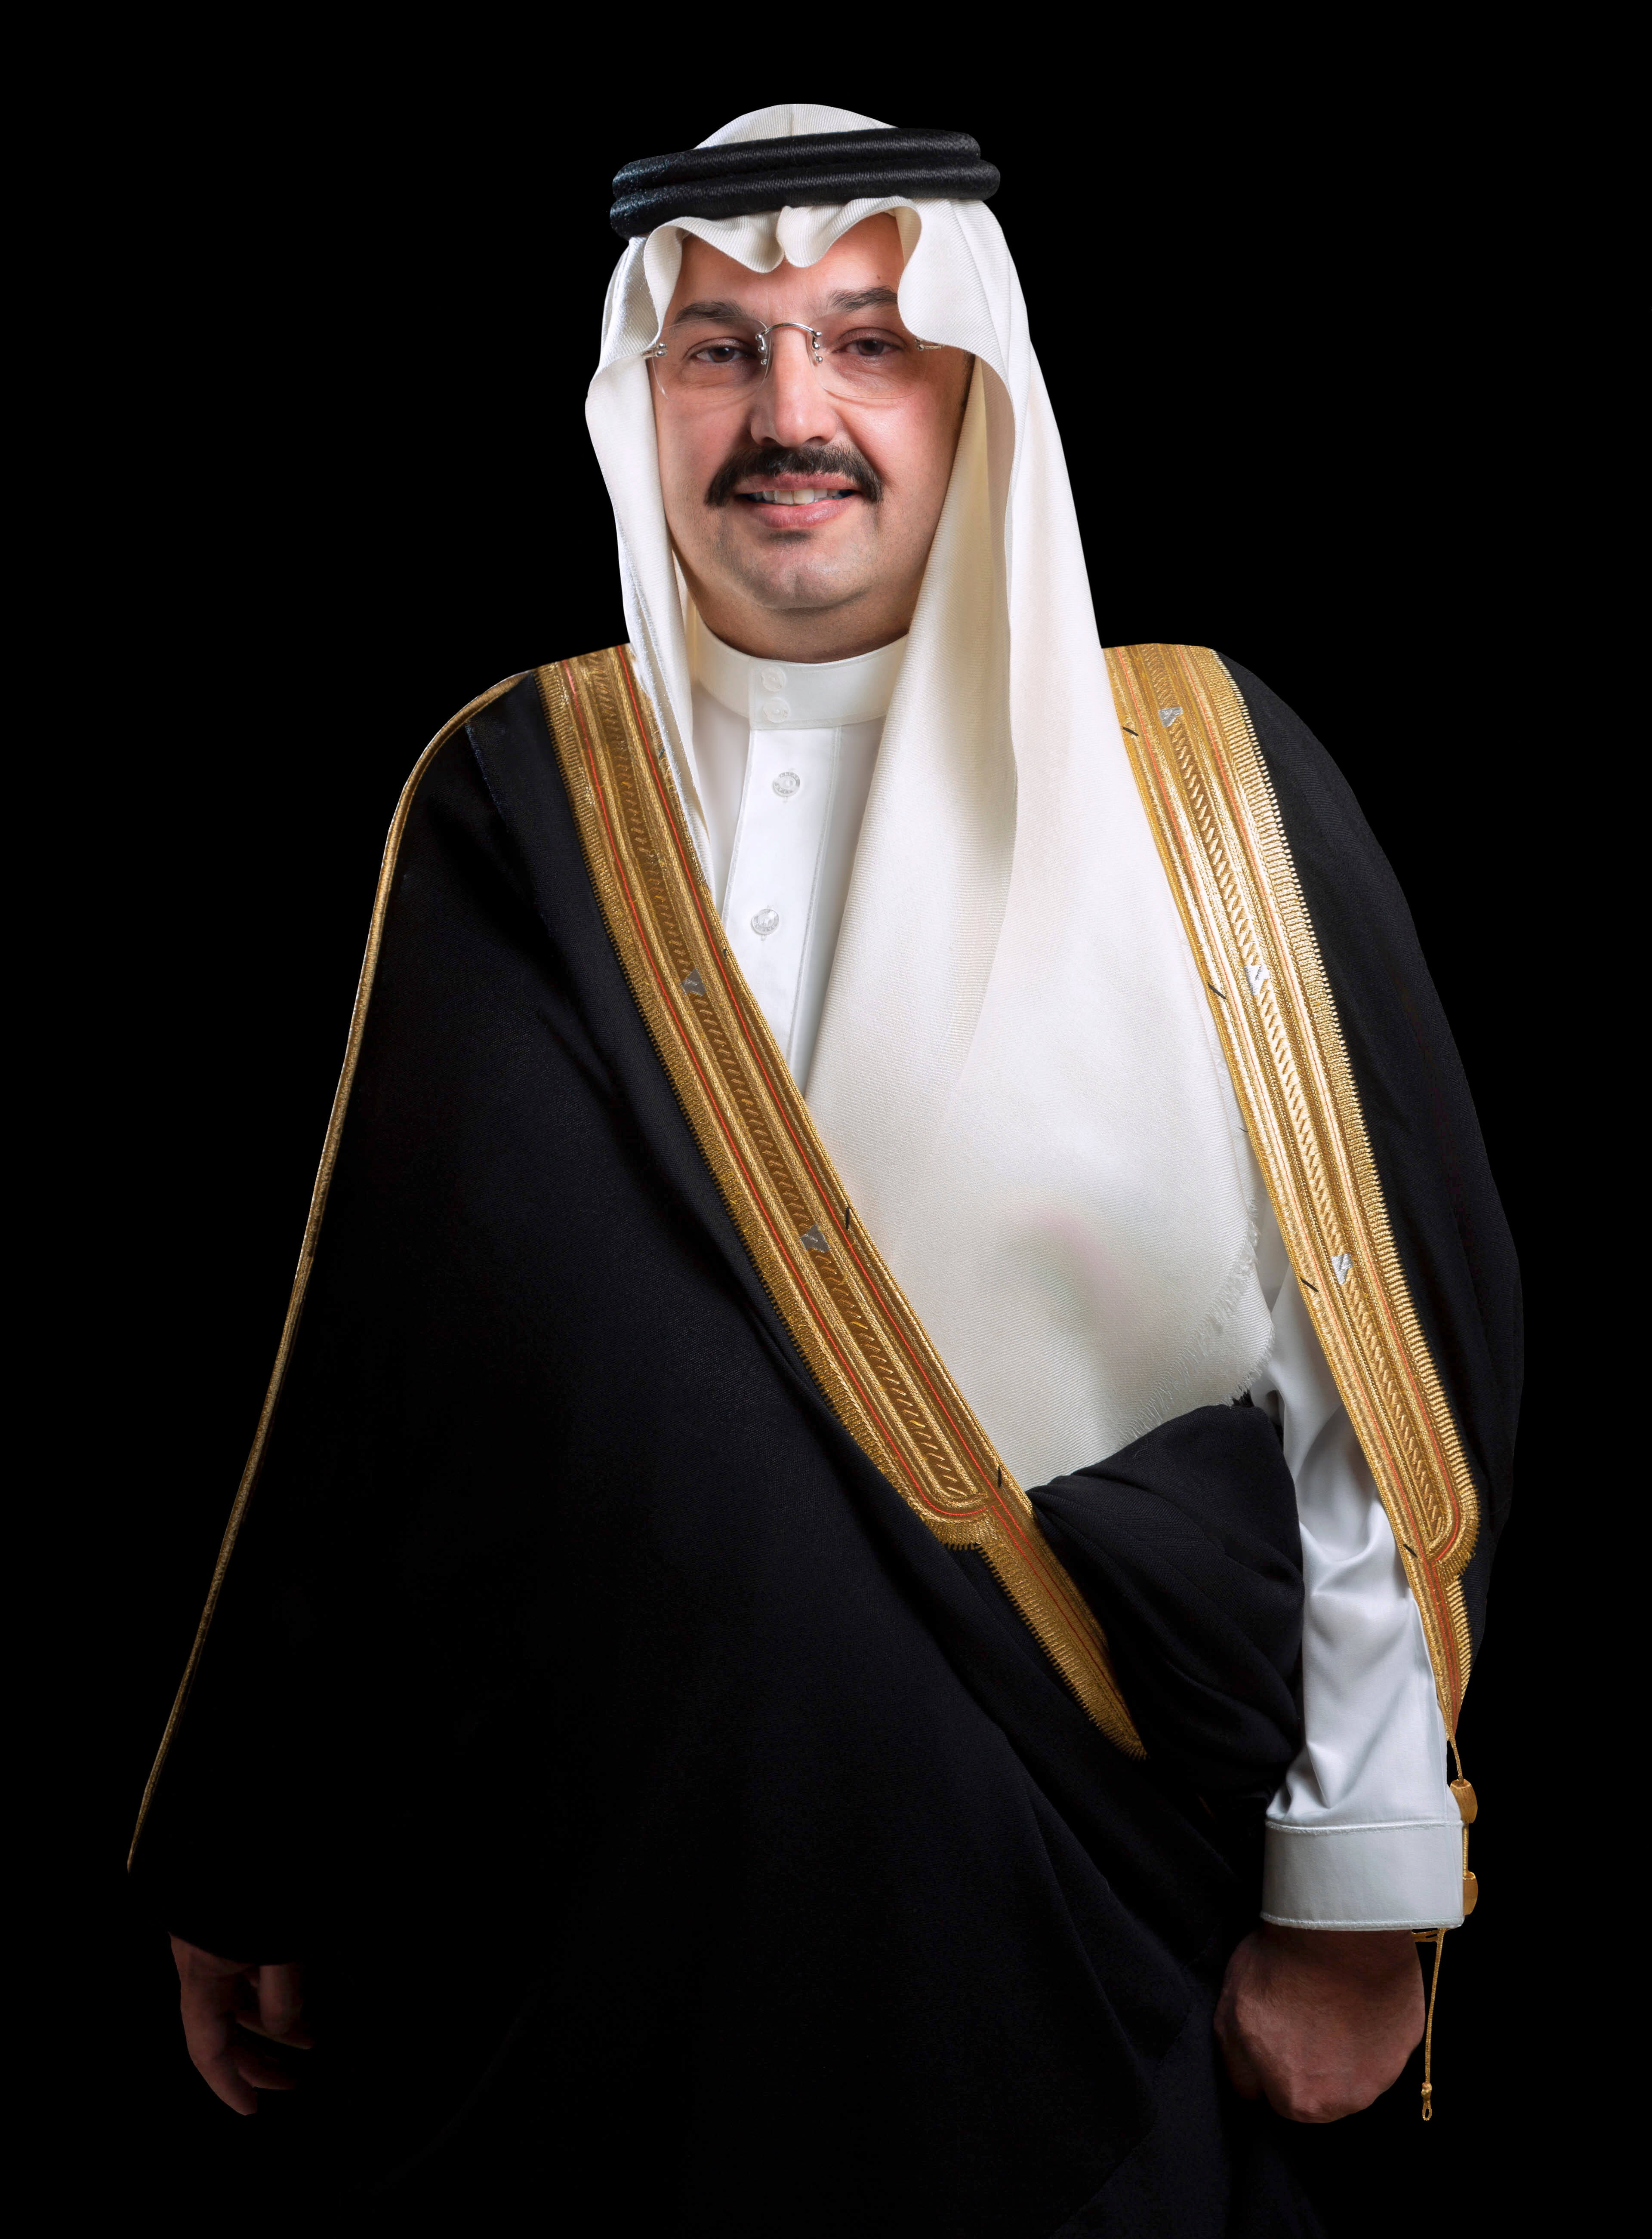 HRH Turki bin Talal bin Abdulaziz Al Saud